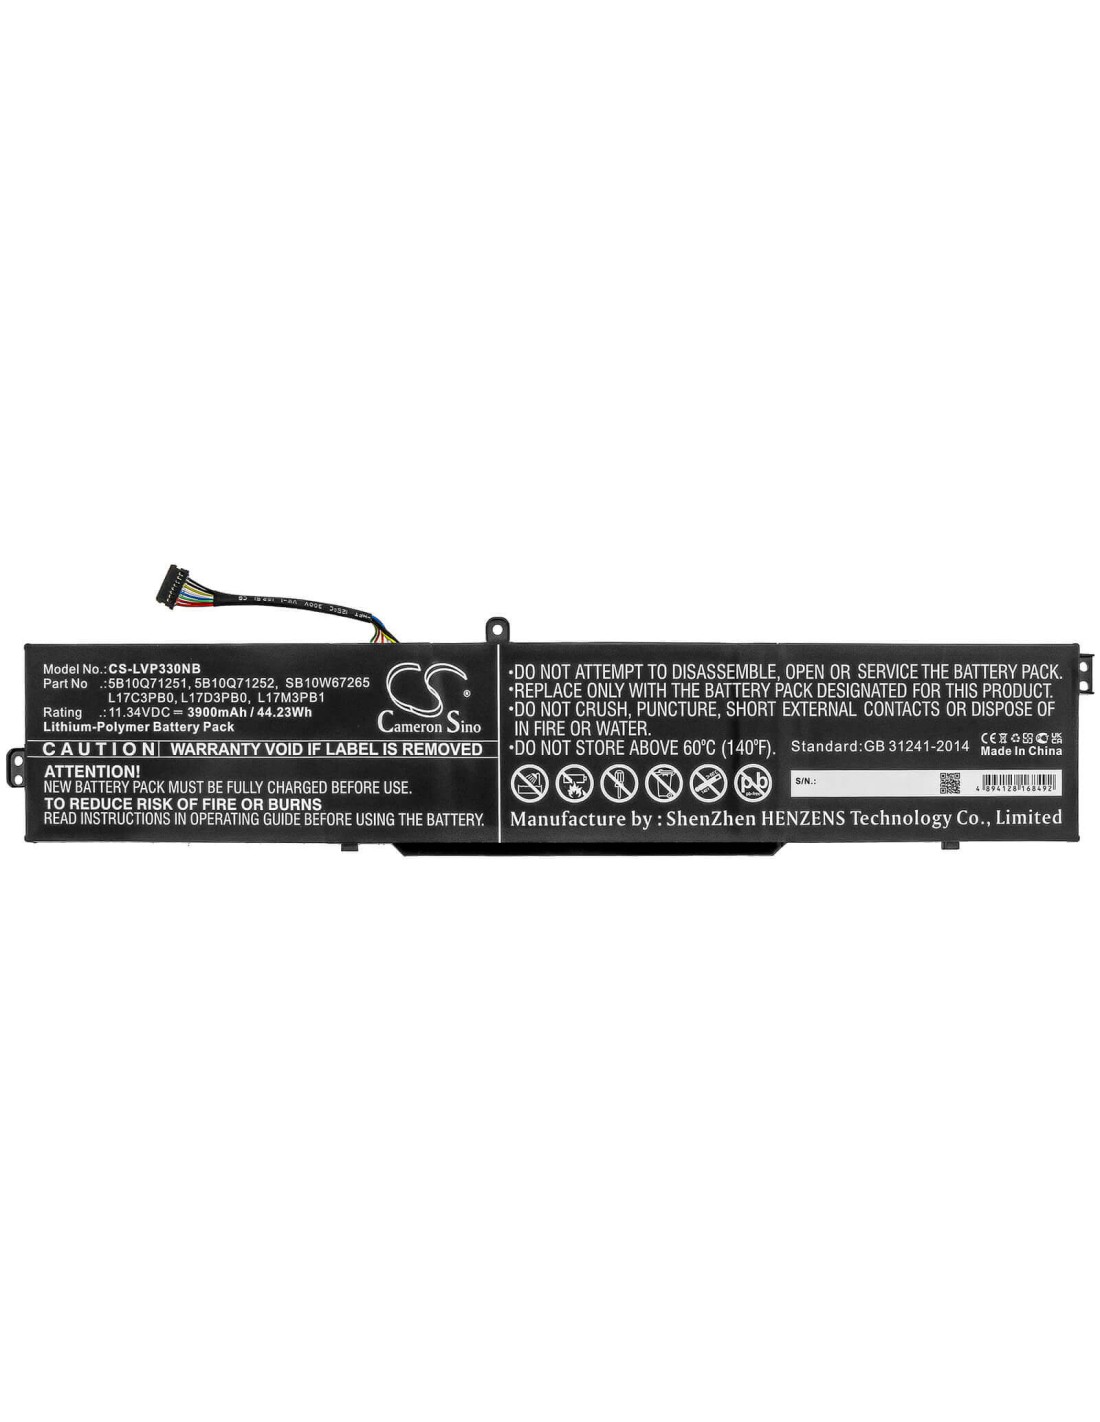 Battery for Lenovo, Ideapad 330-15ich, Ideapad 330-15ich 81fk008nau 11.34V, 3900mAh - 44.23Wh